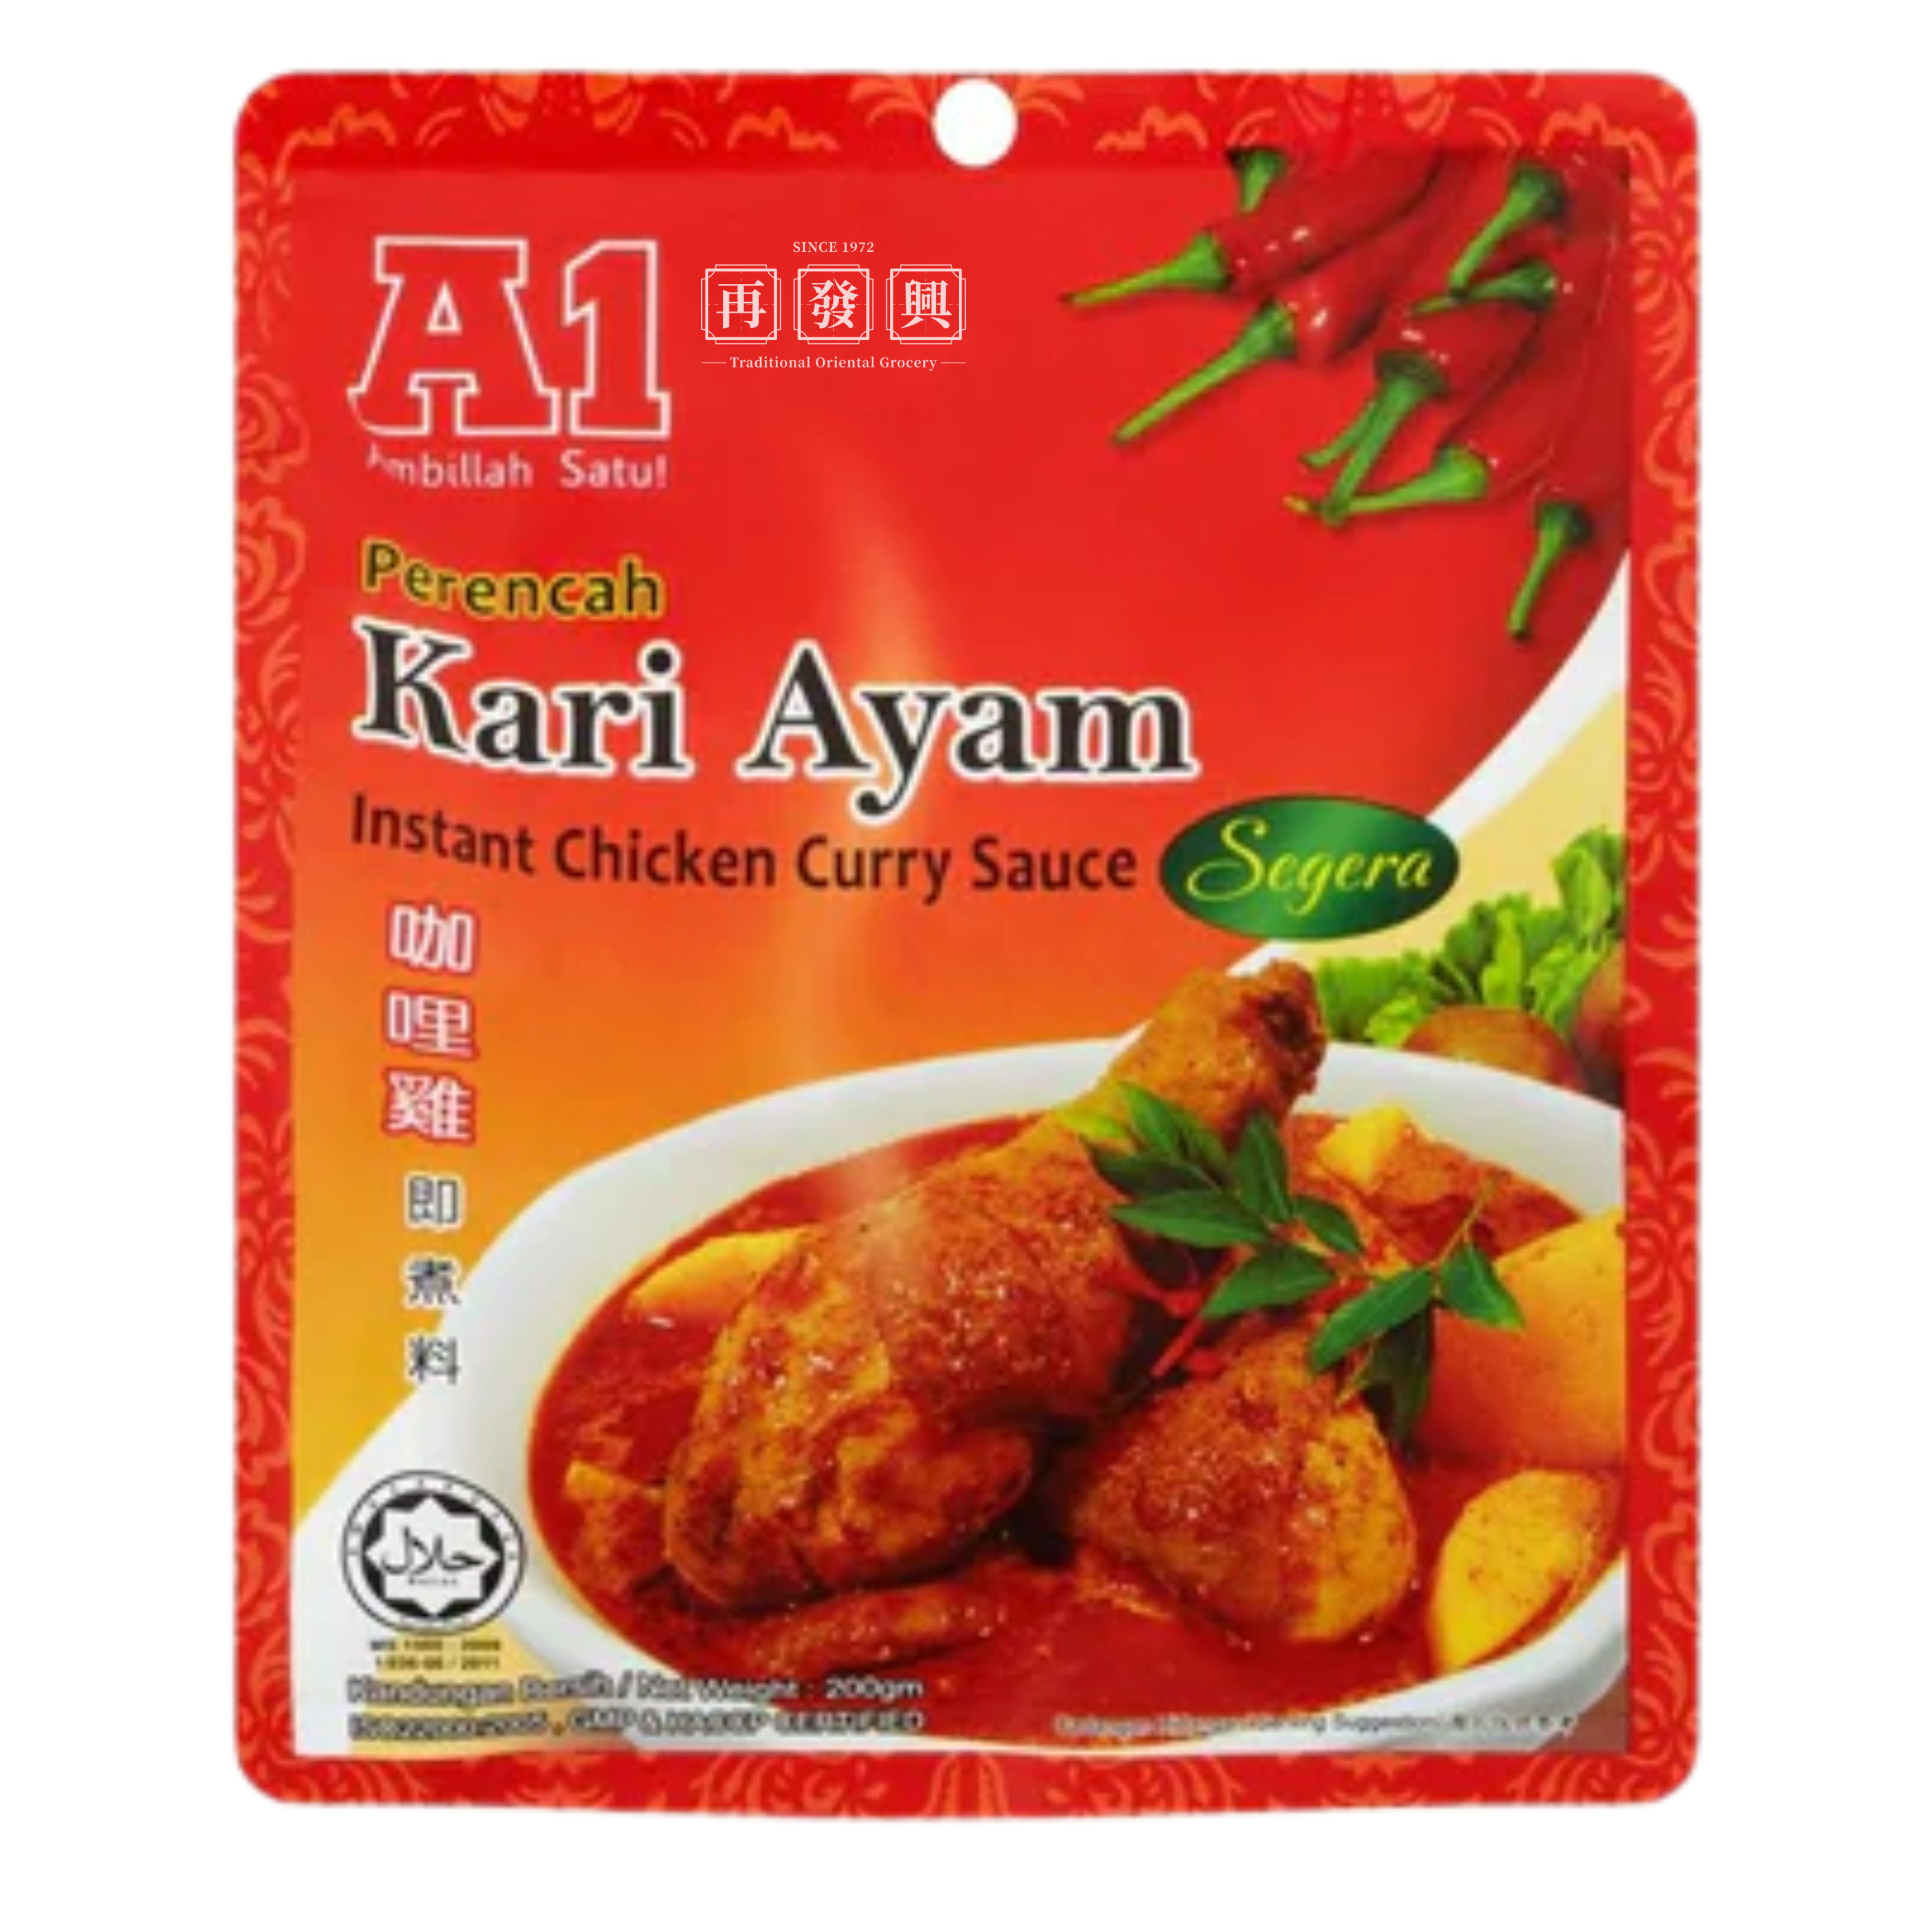 A1 Instant Chicken Curry Sauce (Kari Ayam) 咖喱鸡即煮料 200g